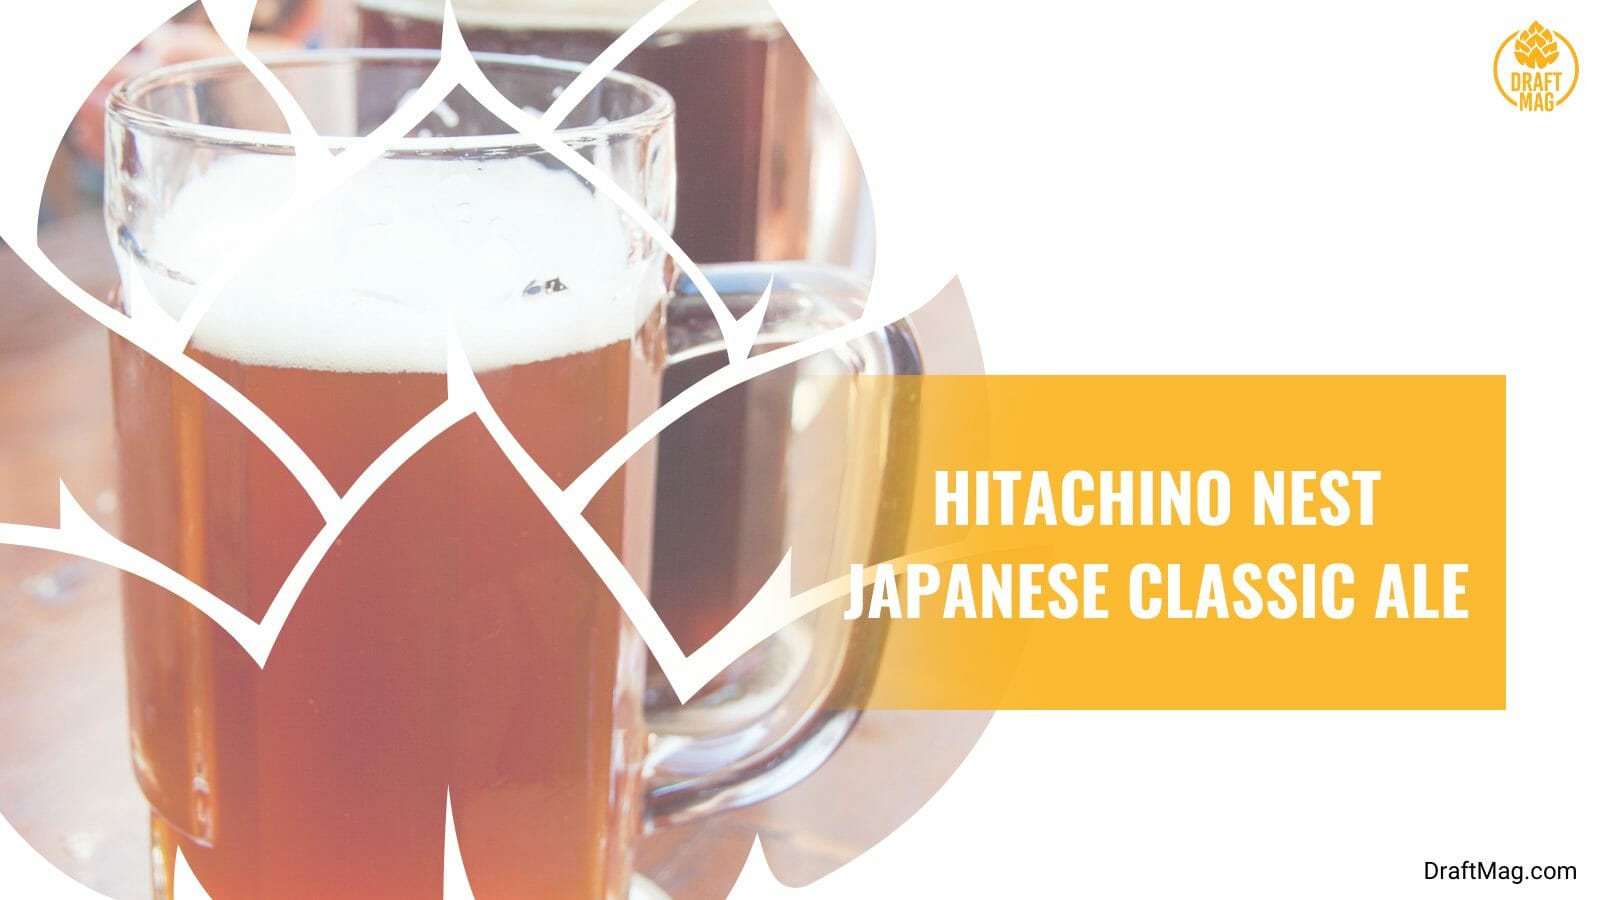 Hitachino nest japanese classic ale